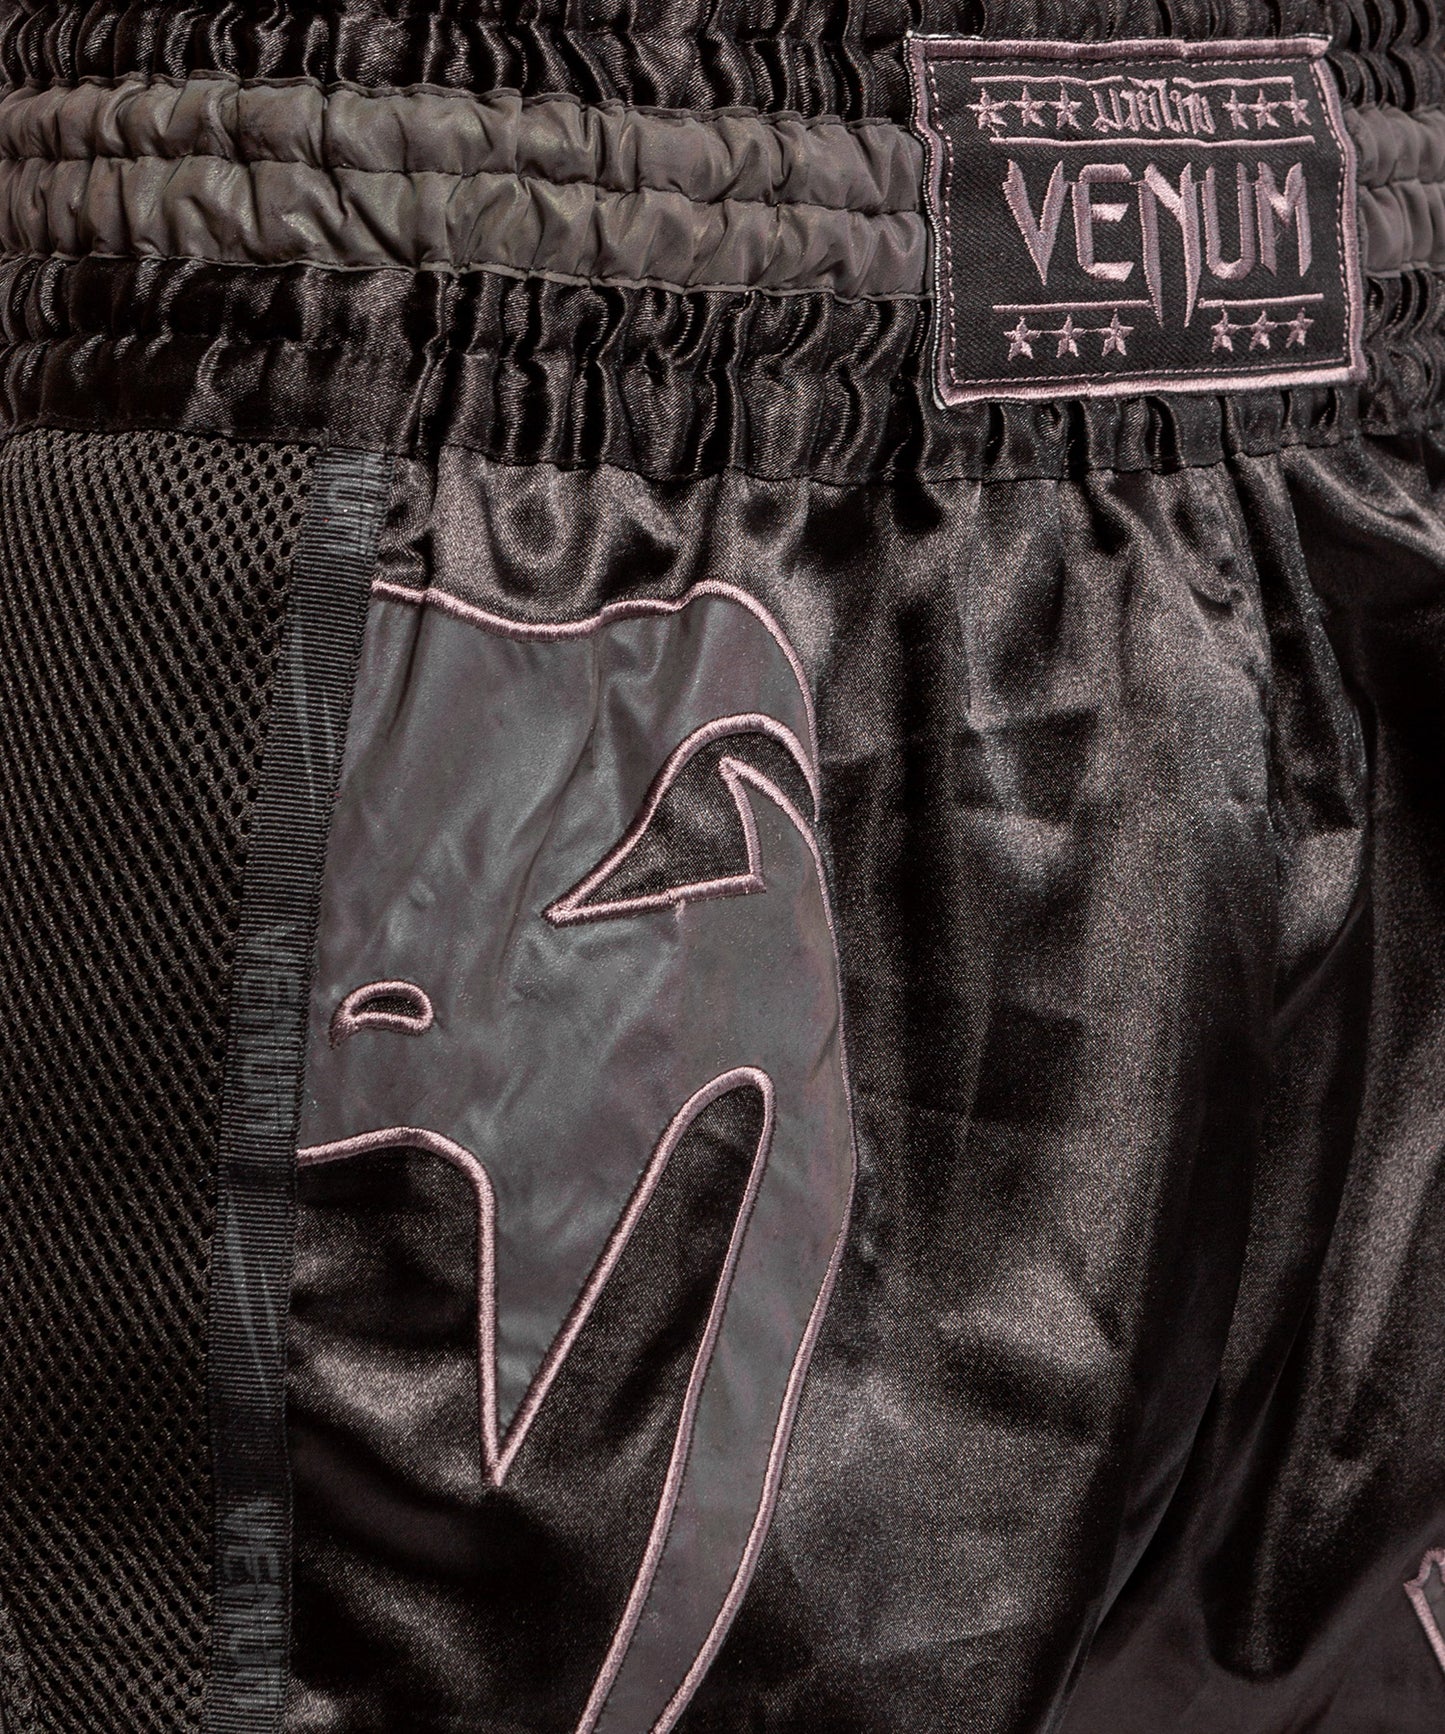 Pantalones de Muay Thai Venum Giant Glow - Negro